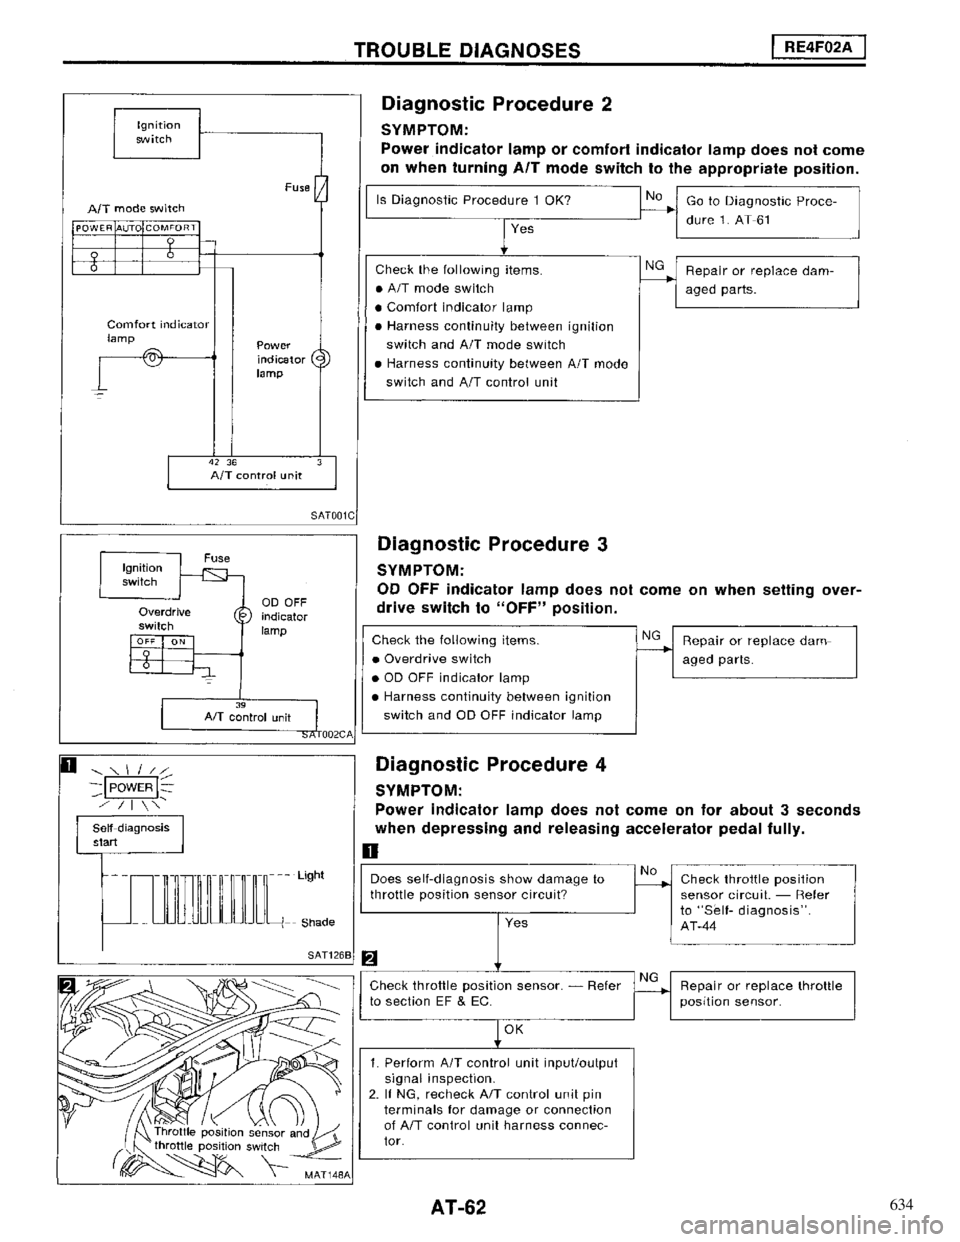 NISSAN MAXIMA 1994 A32 / 4.G Automatic Transaxle Repair Manual 634 